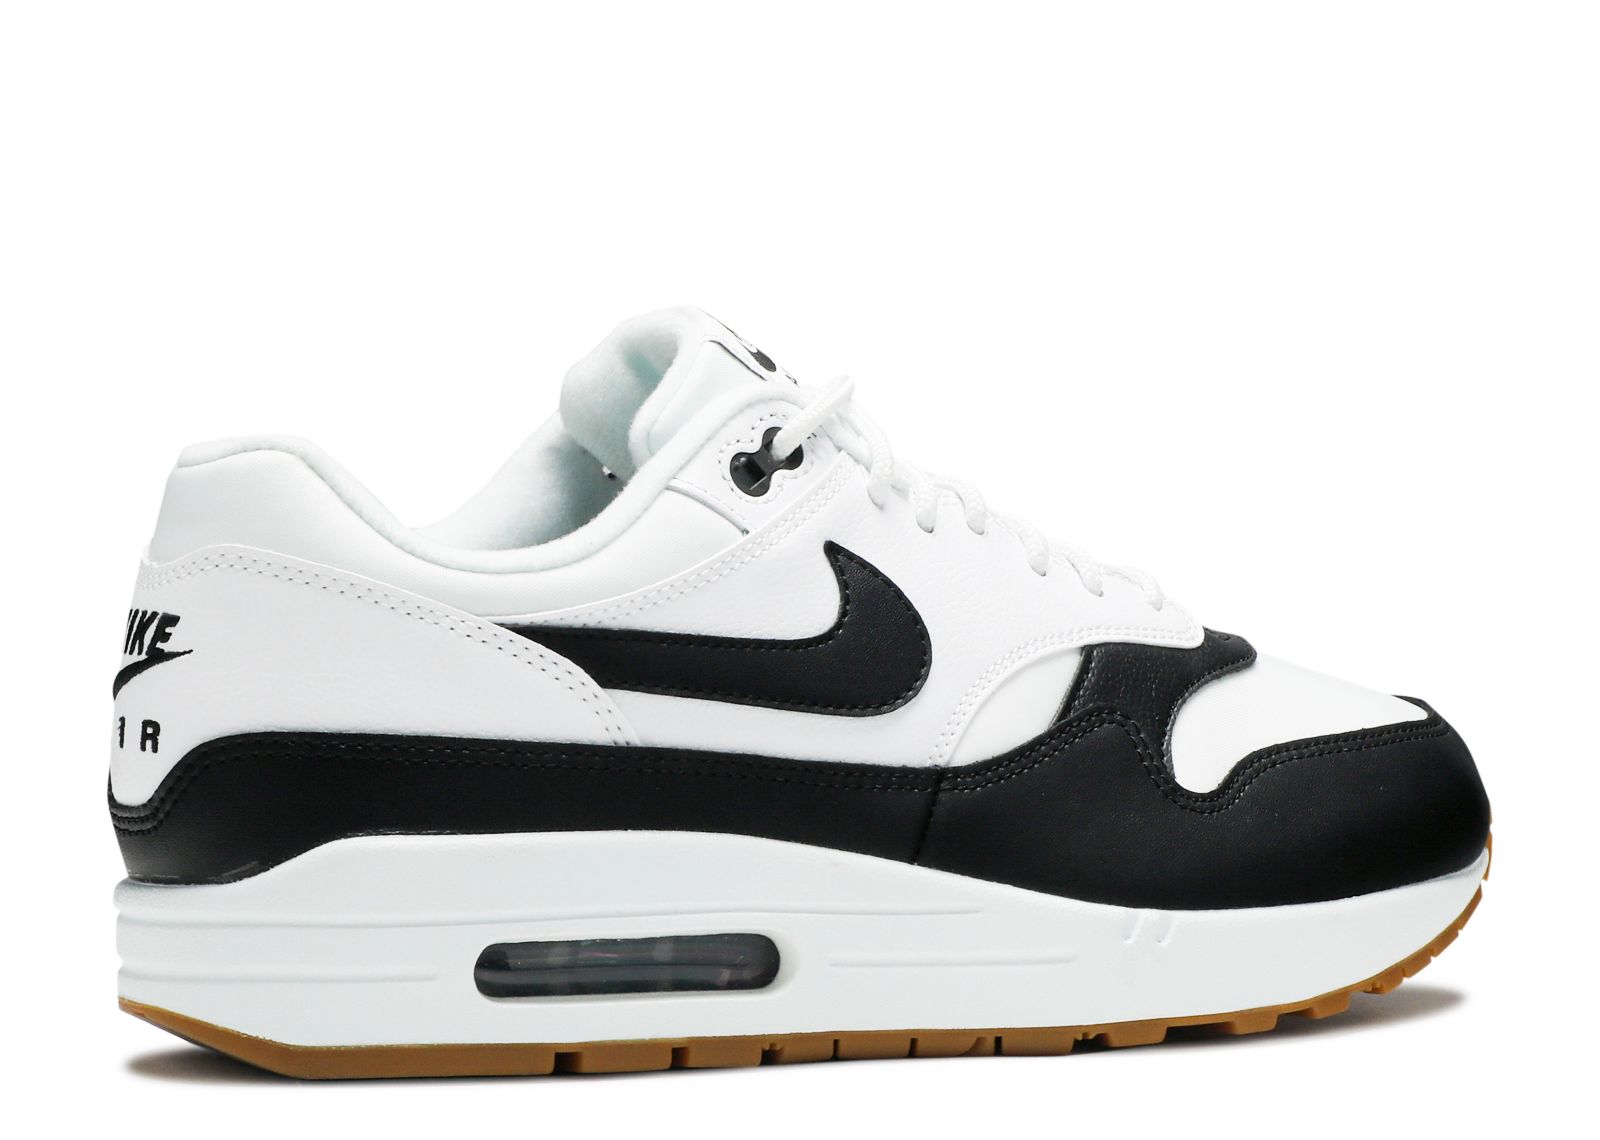 Nike Air Max 1 SE 'White/Black/Gum' Shoes - Size 13